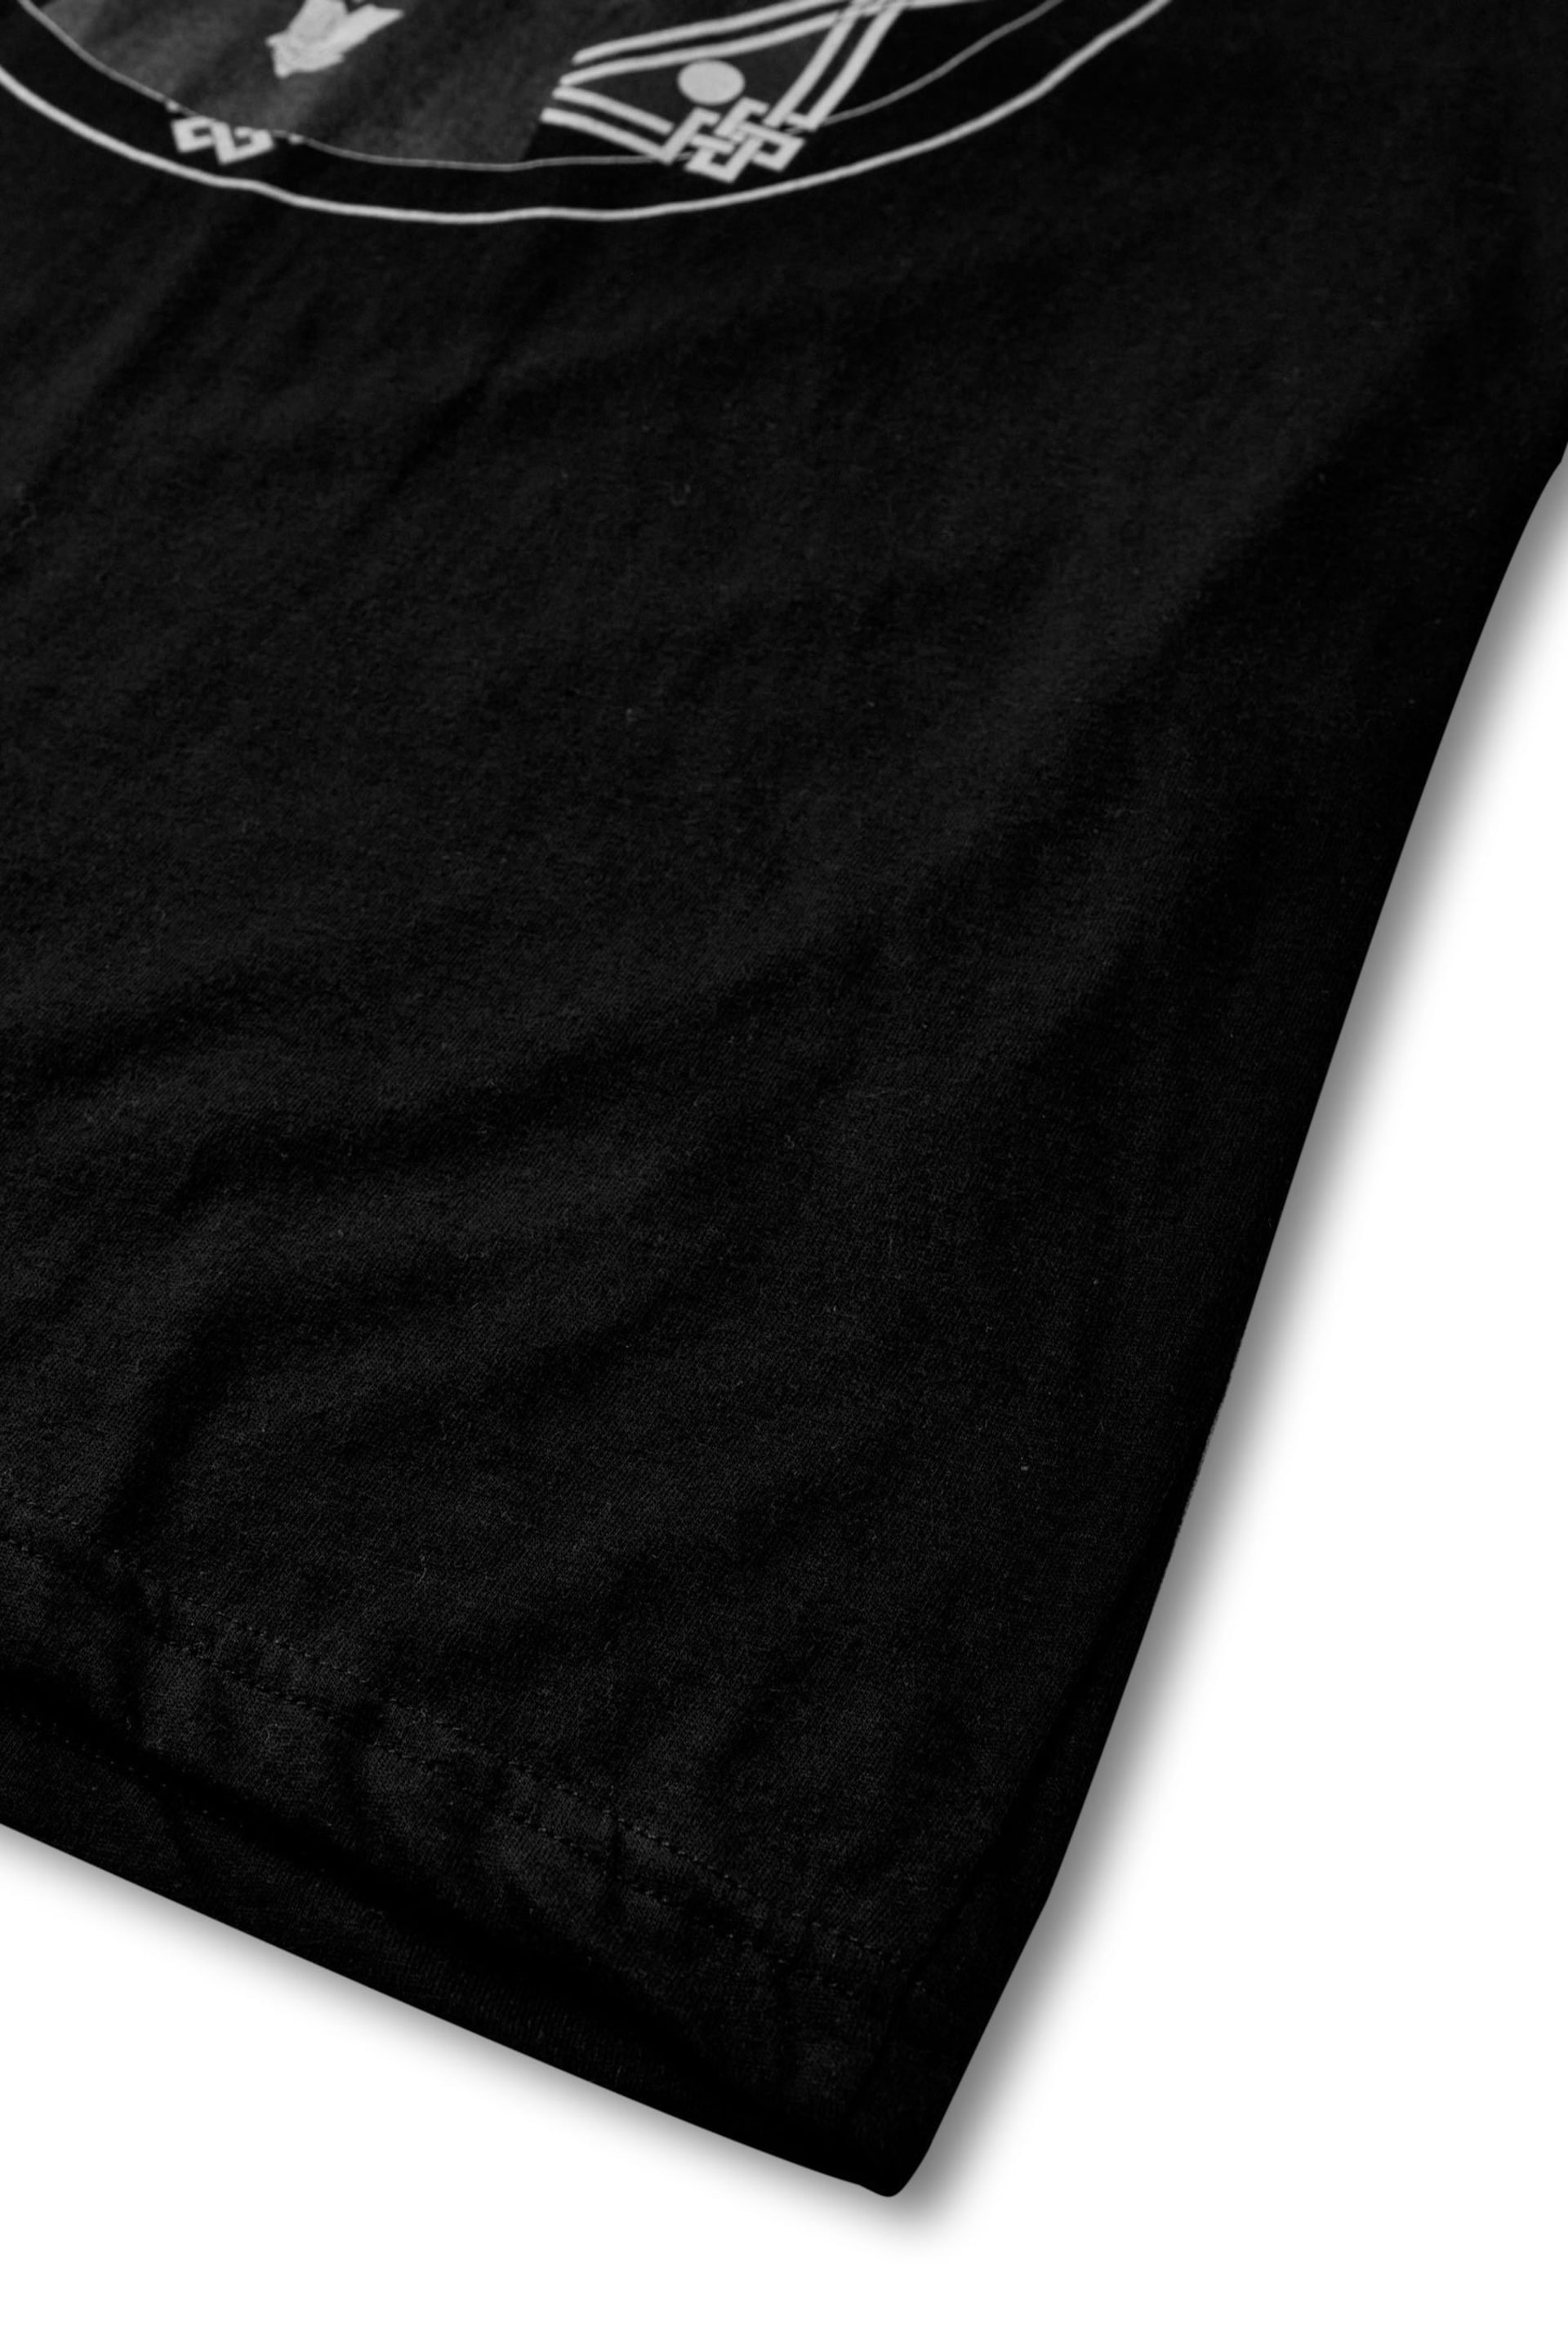 Vanilla Underground Black Wednesday Ladies Licensing T-Shirt - Image 3 of 4